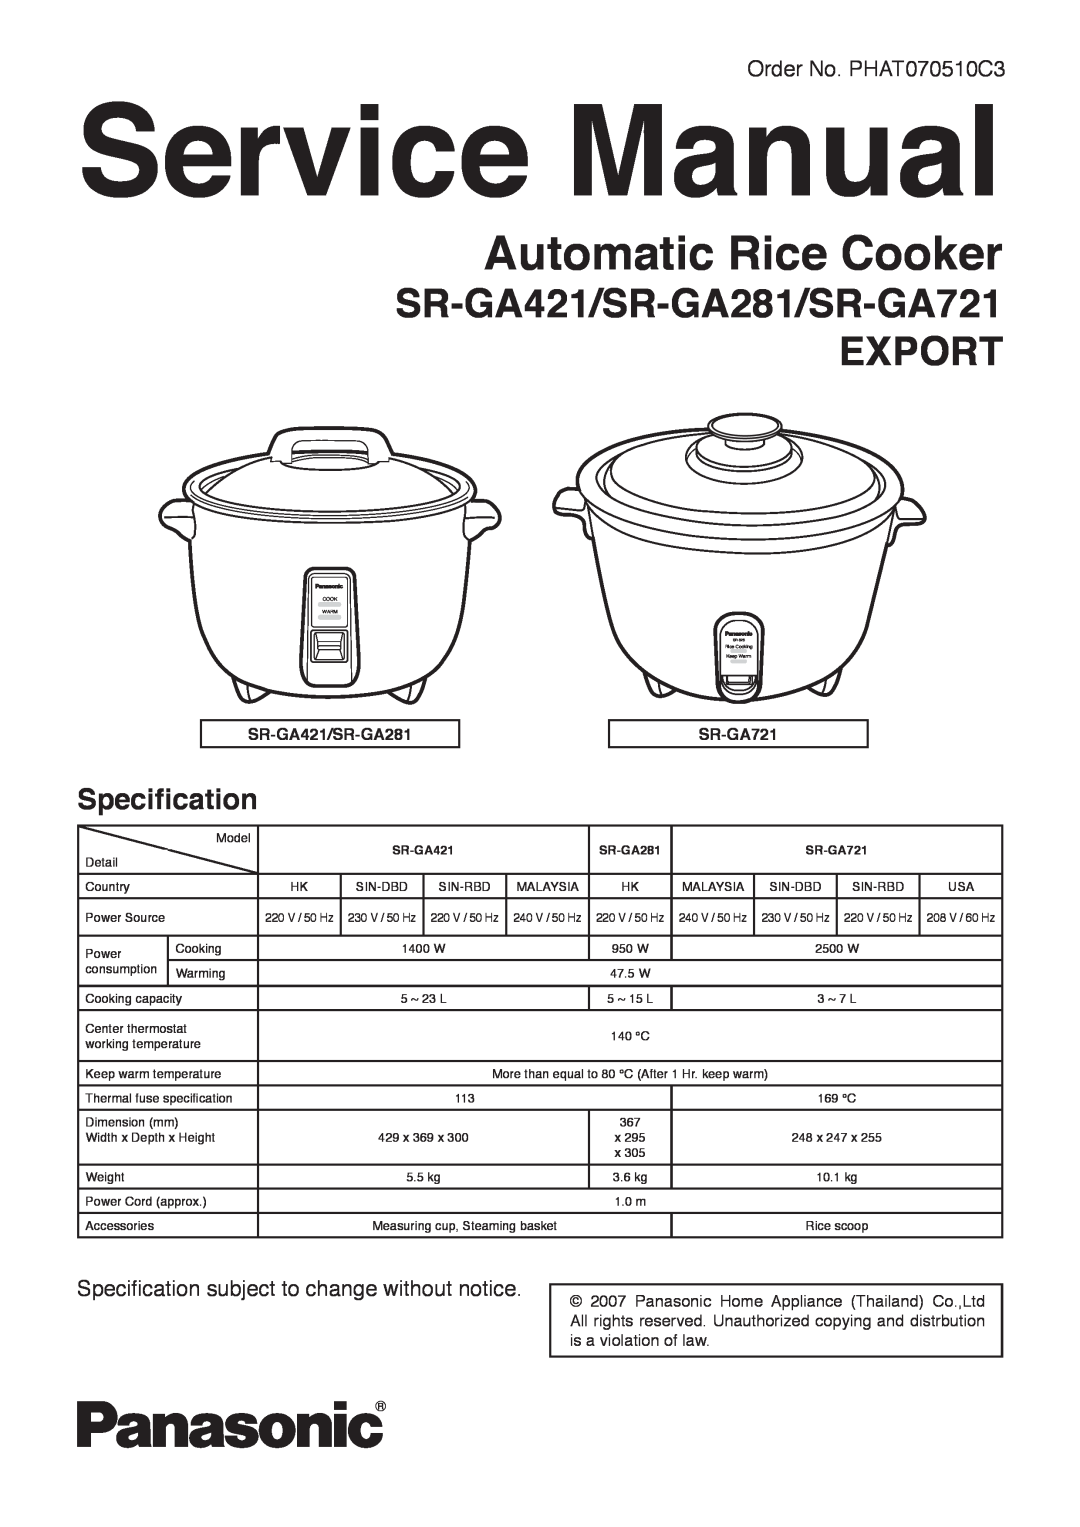 Panasonic service manual Service Manual, Automatic Rice Cooker, SR-GA421/SR-GA281/SR-GA721 EXPORT, Specification 